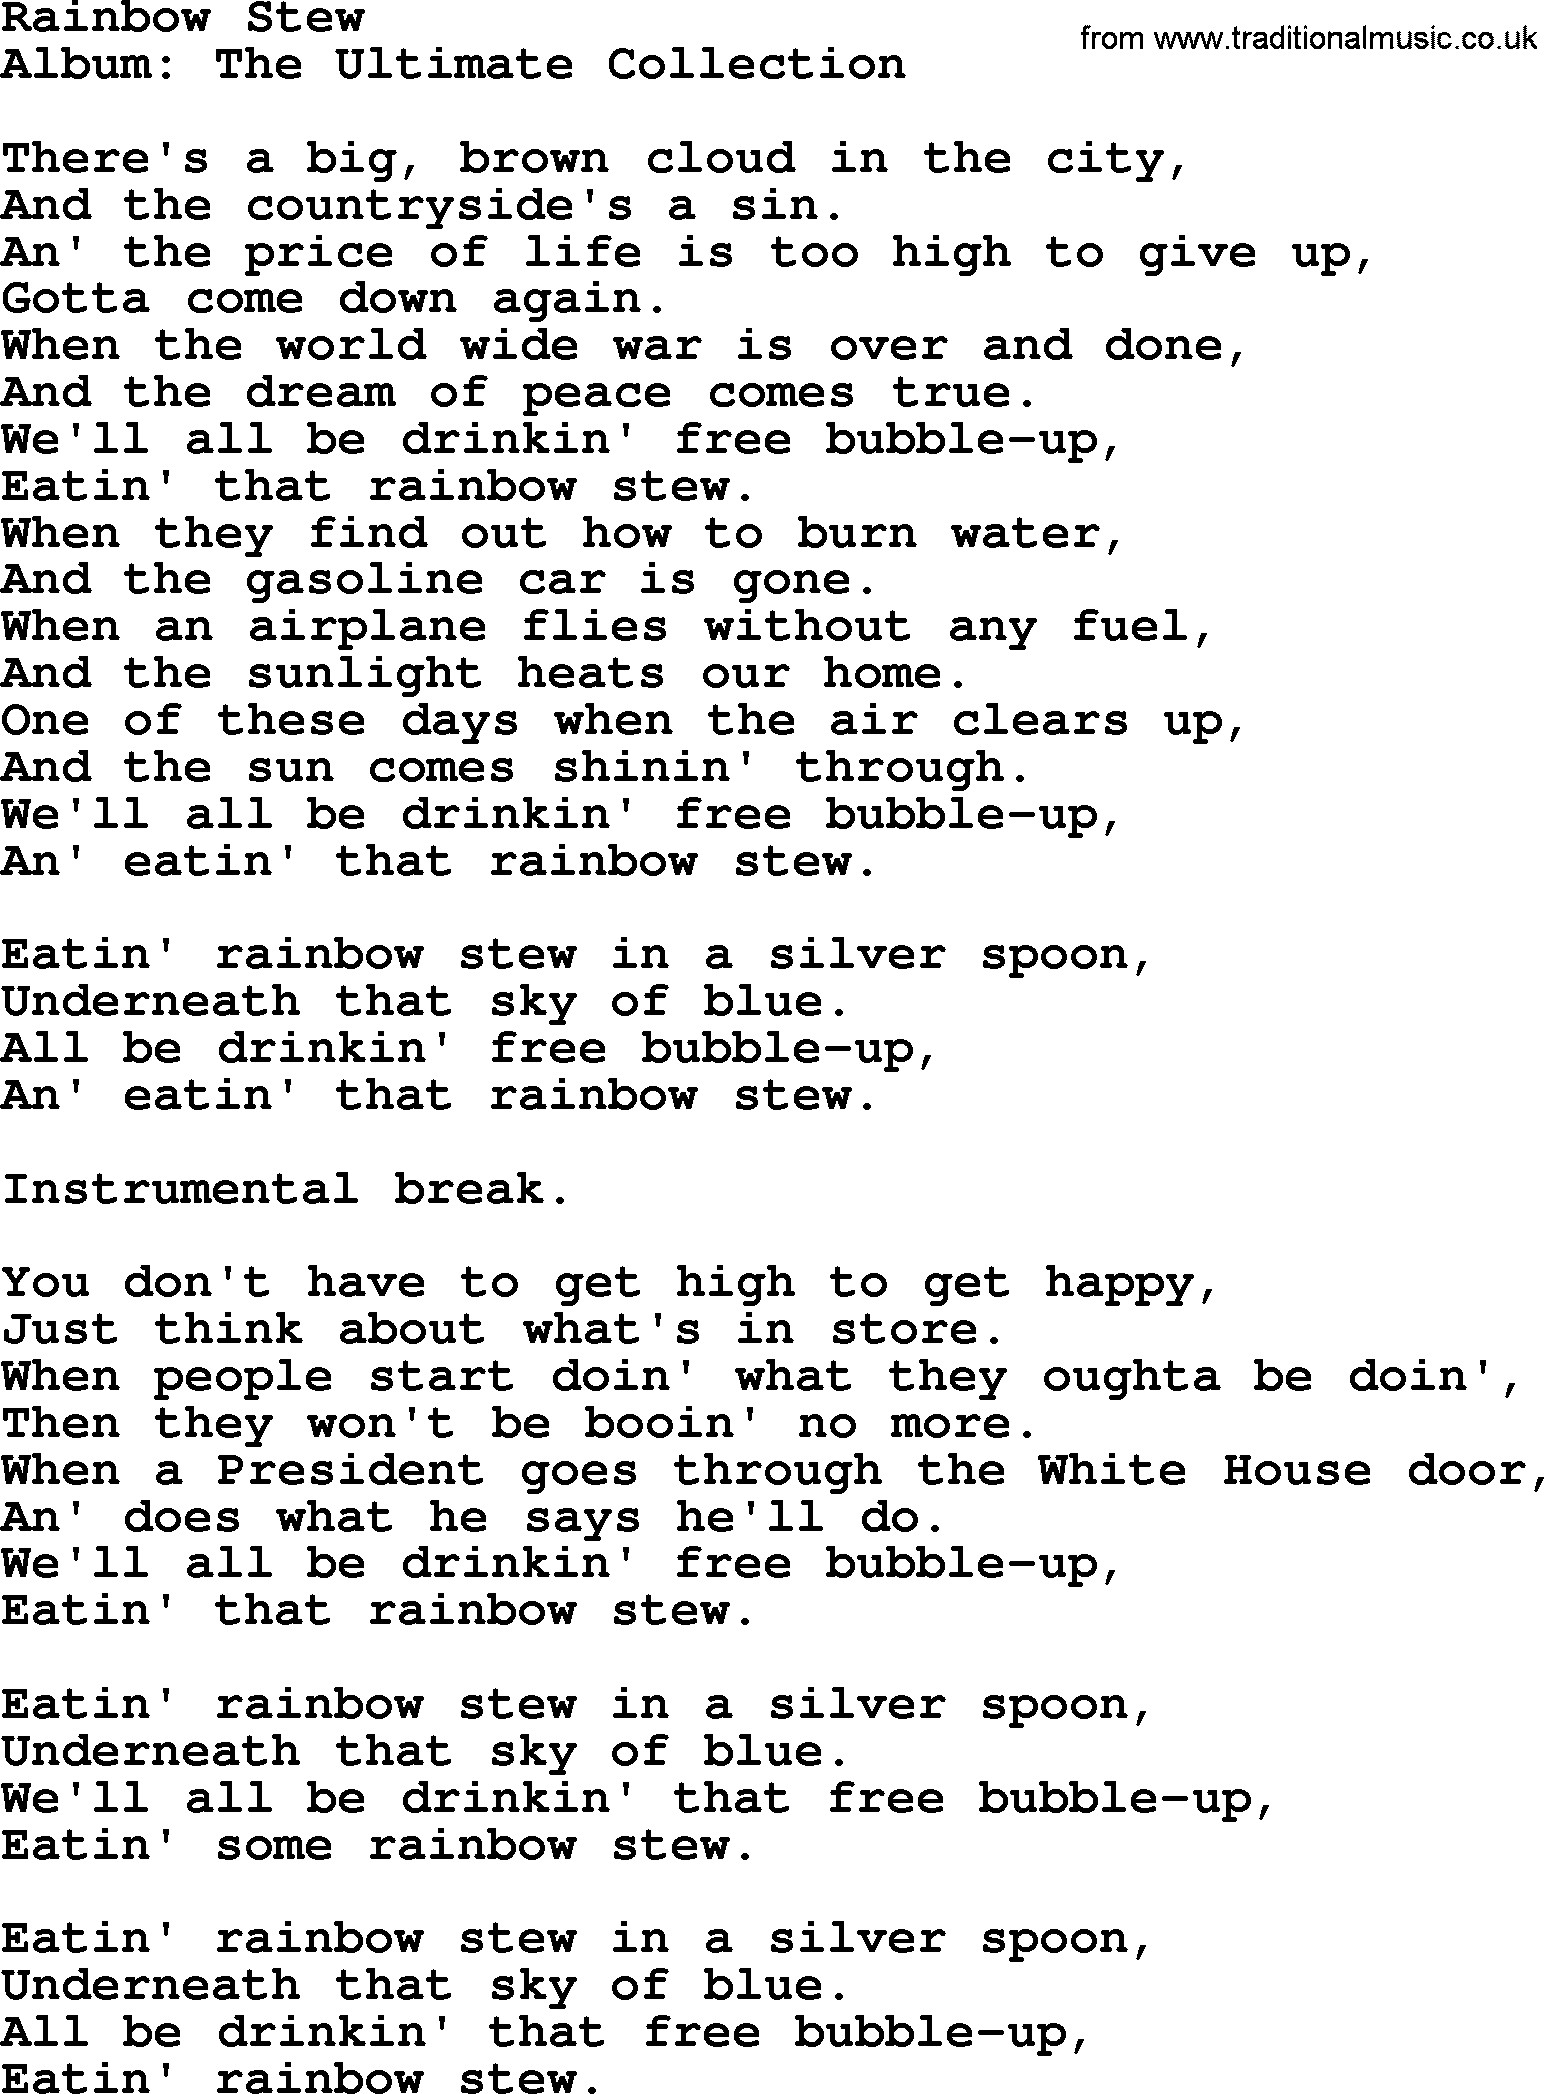 Rainbow Stew Lyrics
 Rainbow Stew by Merle Haggard lyrics